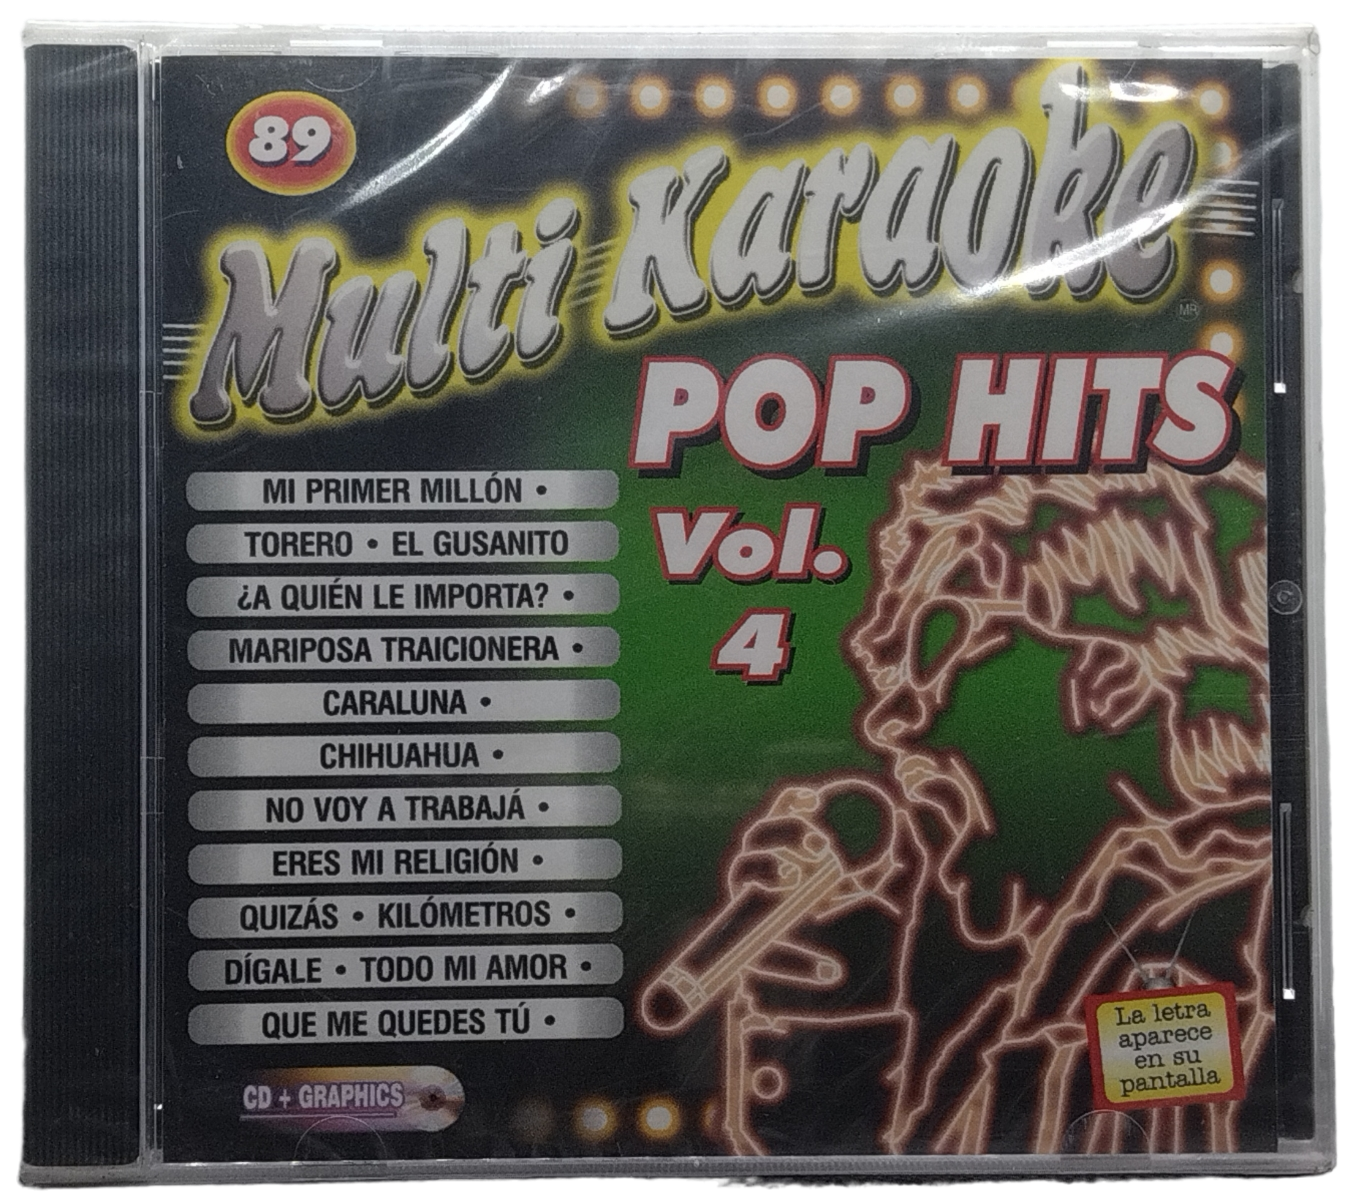 multi karaoke  - canta como pop hits vol. 4